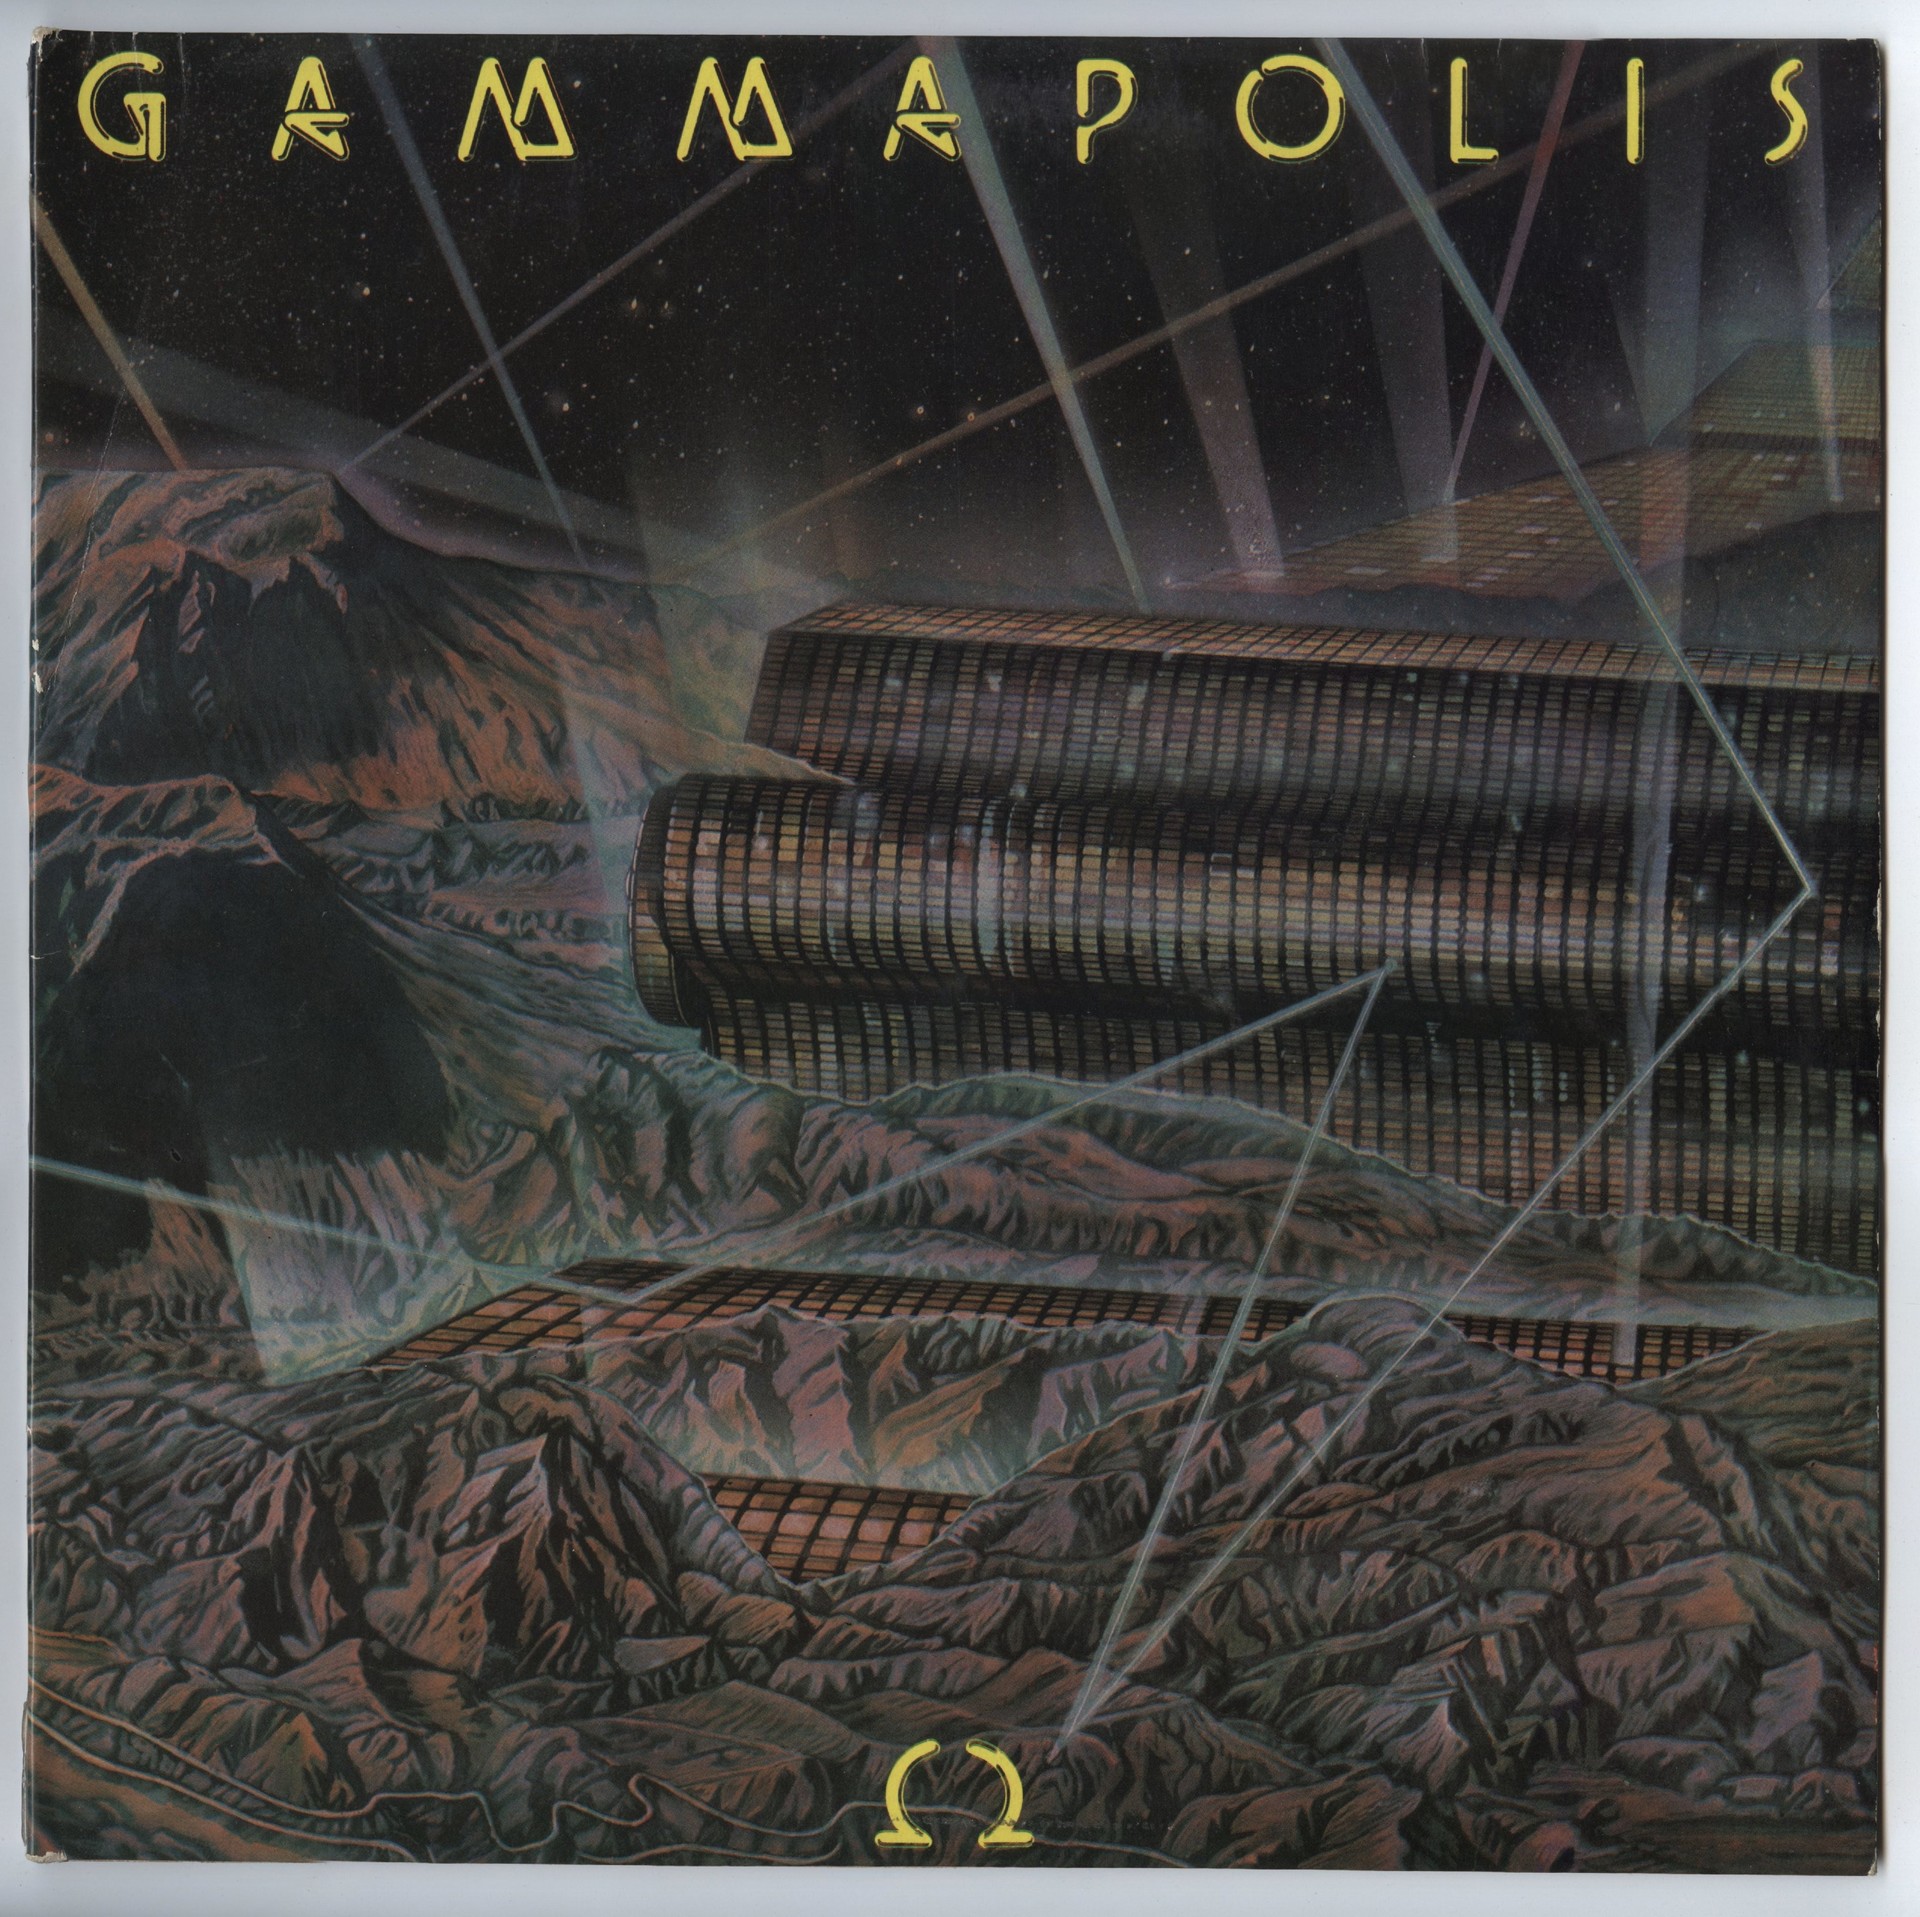 Omega 1979 Gammapolis LP face.jpg